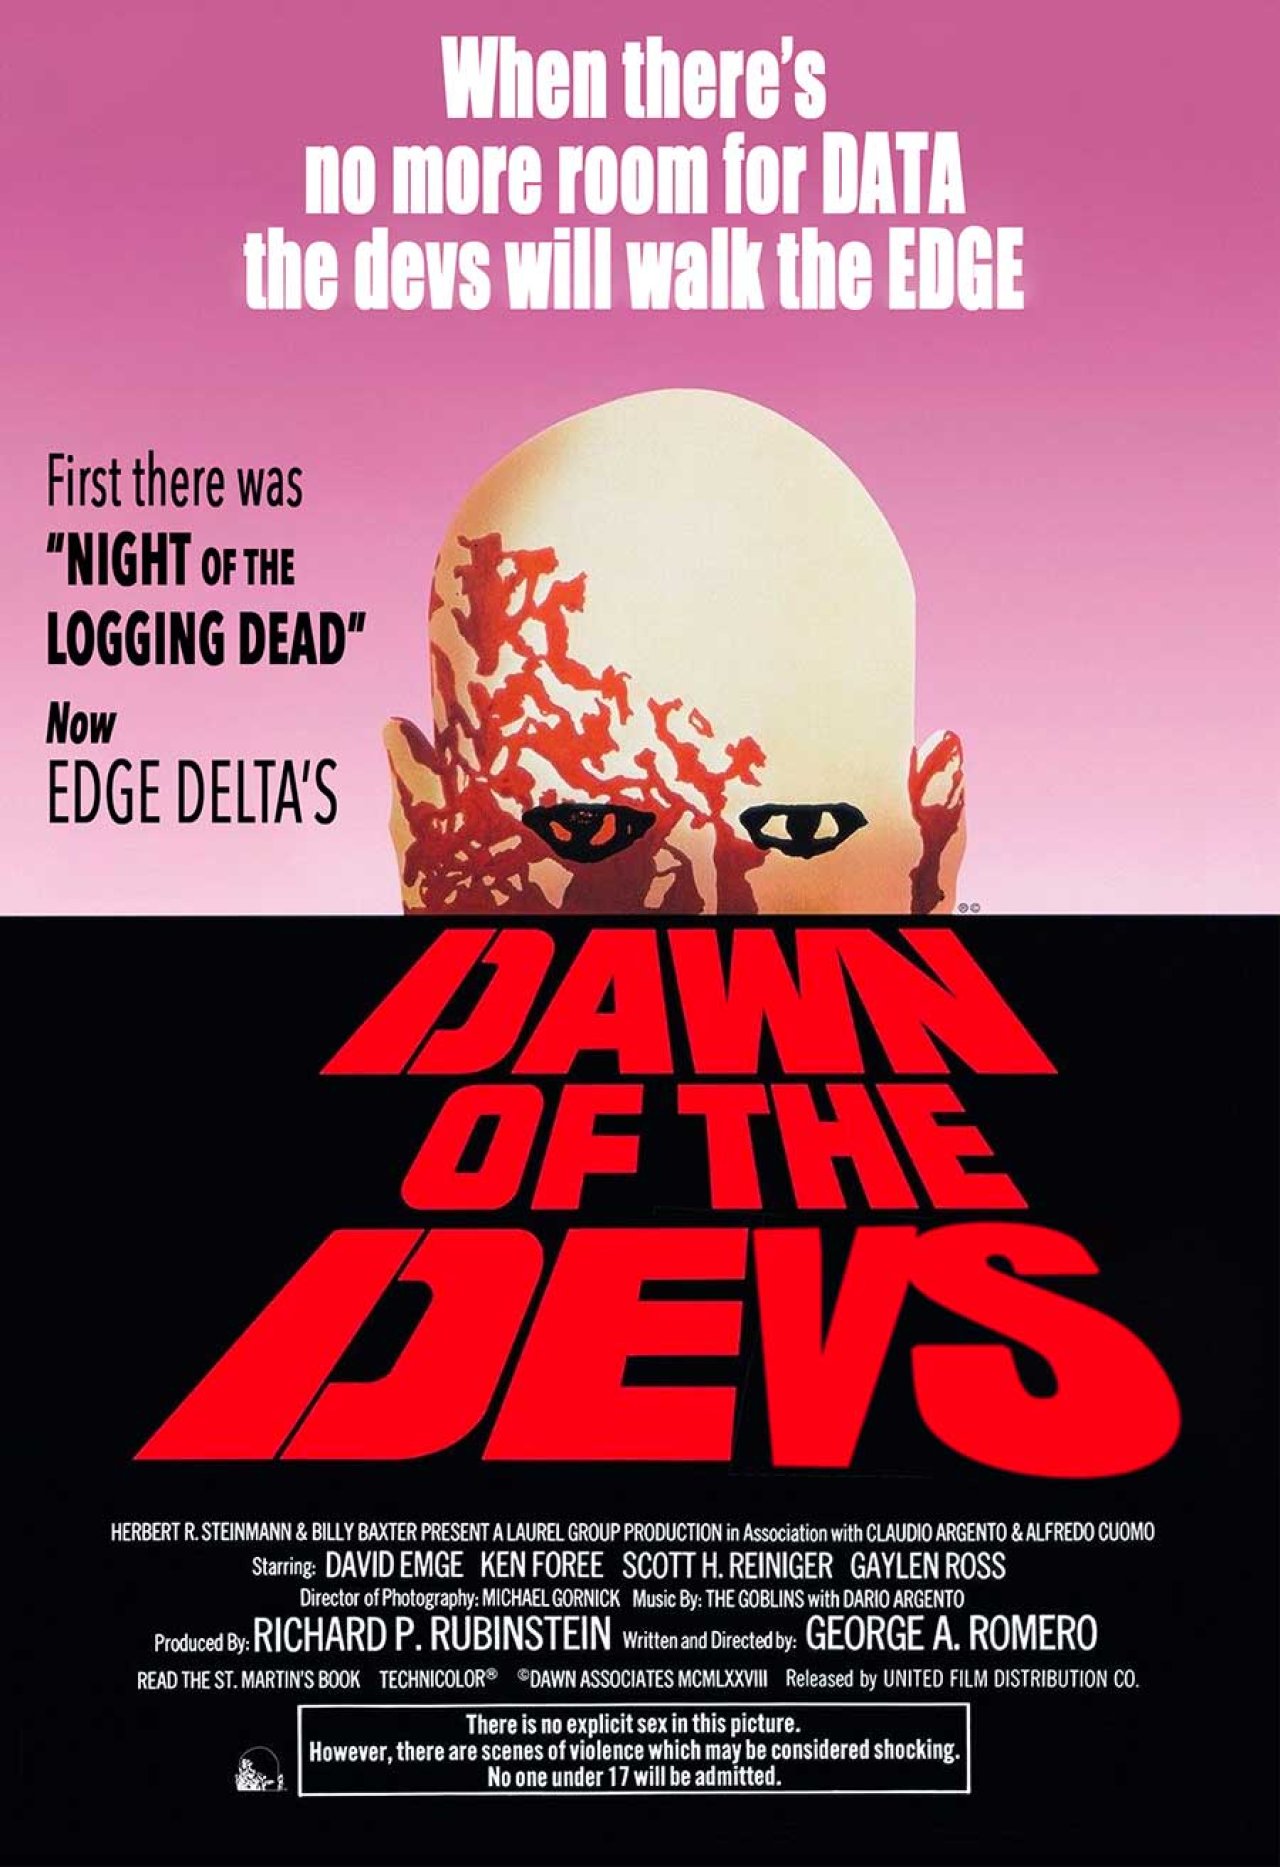 Movie poster parody - Dawn of the Devs.